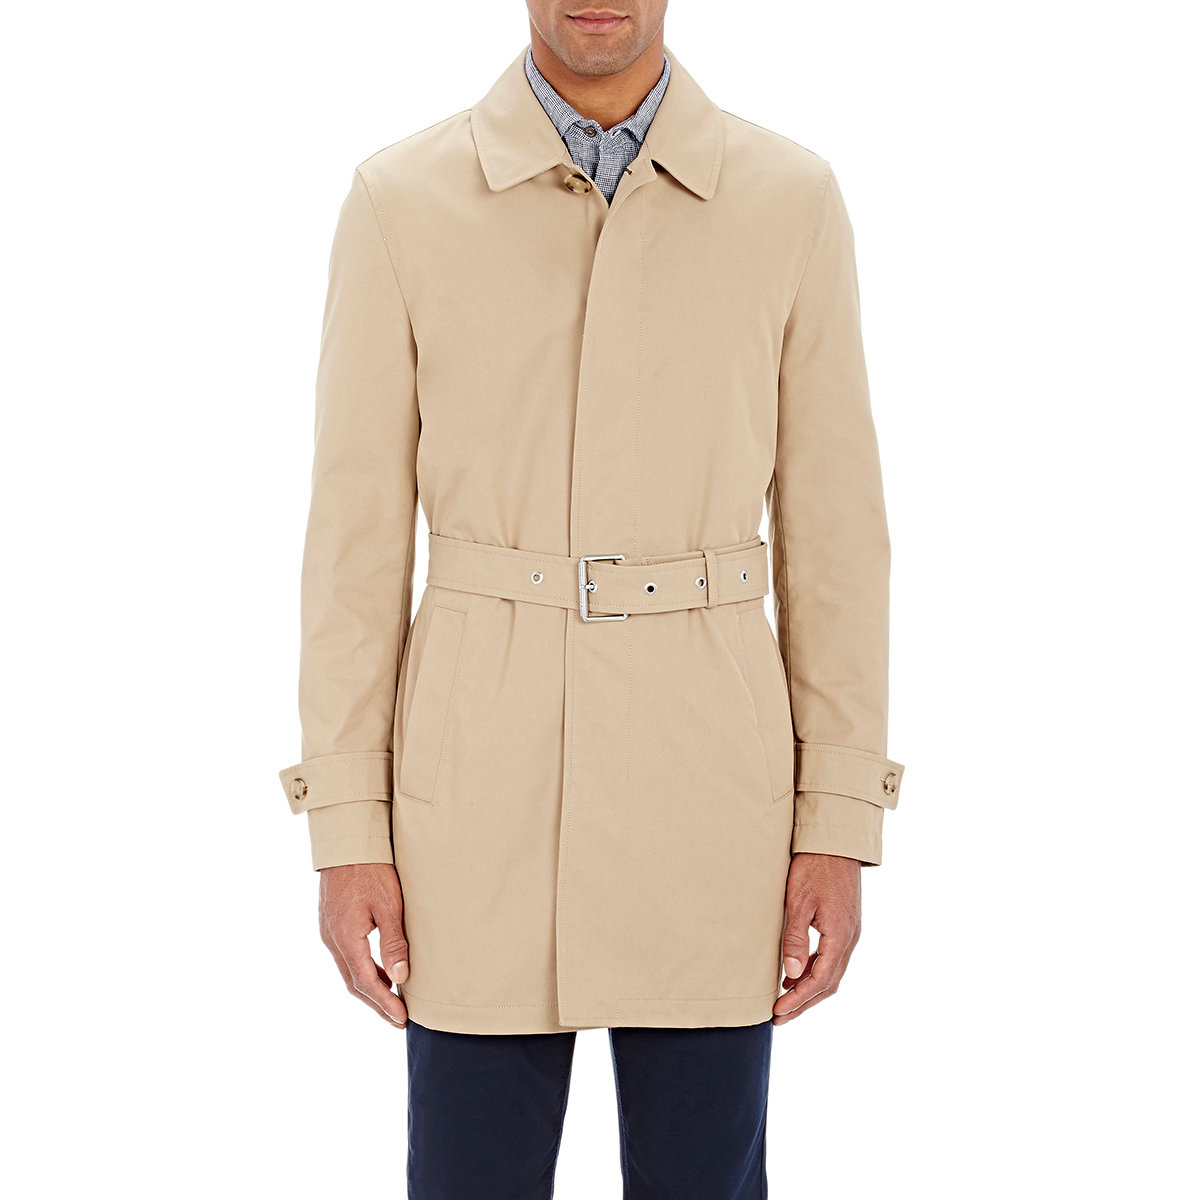 2016 winter trench coat men, fashion long overcoat men,hot